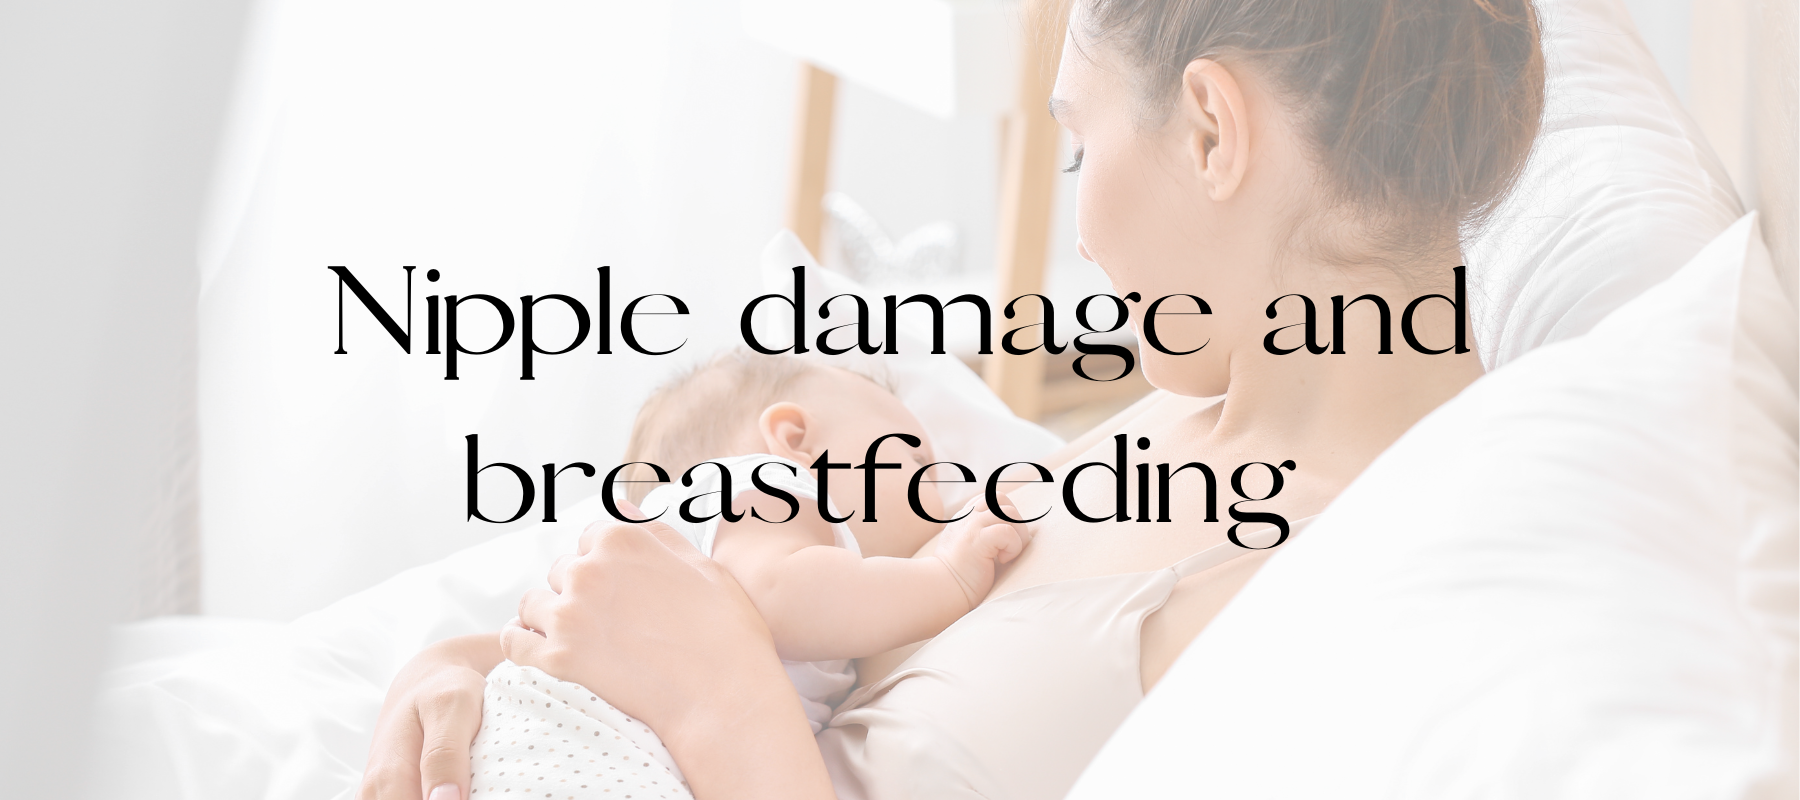 Nipple damage and breastfeeding